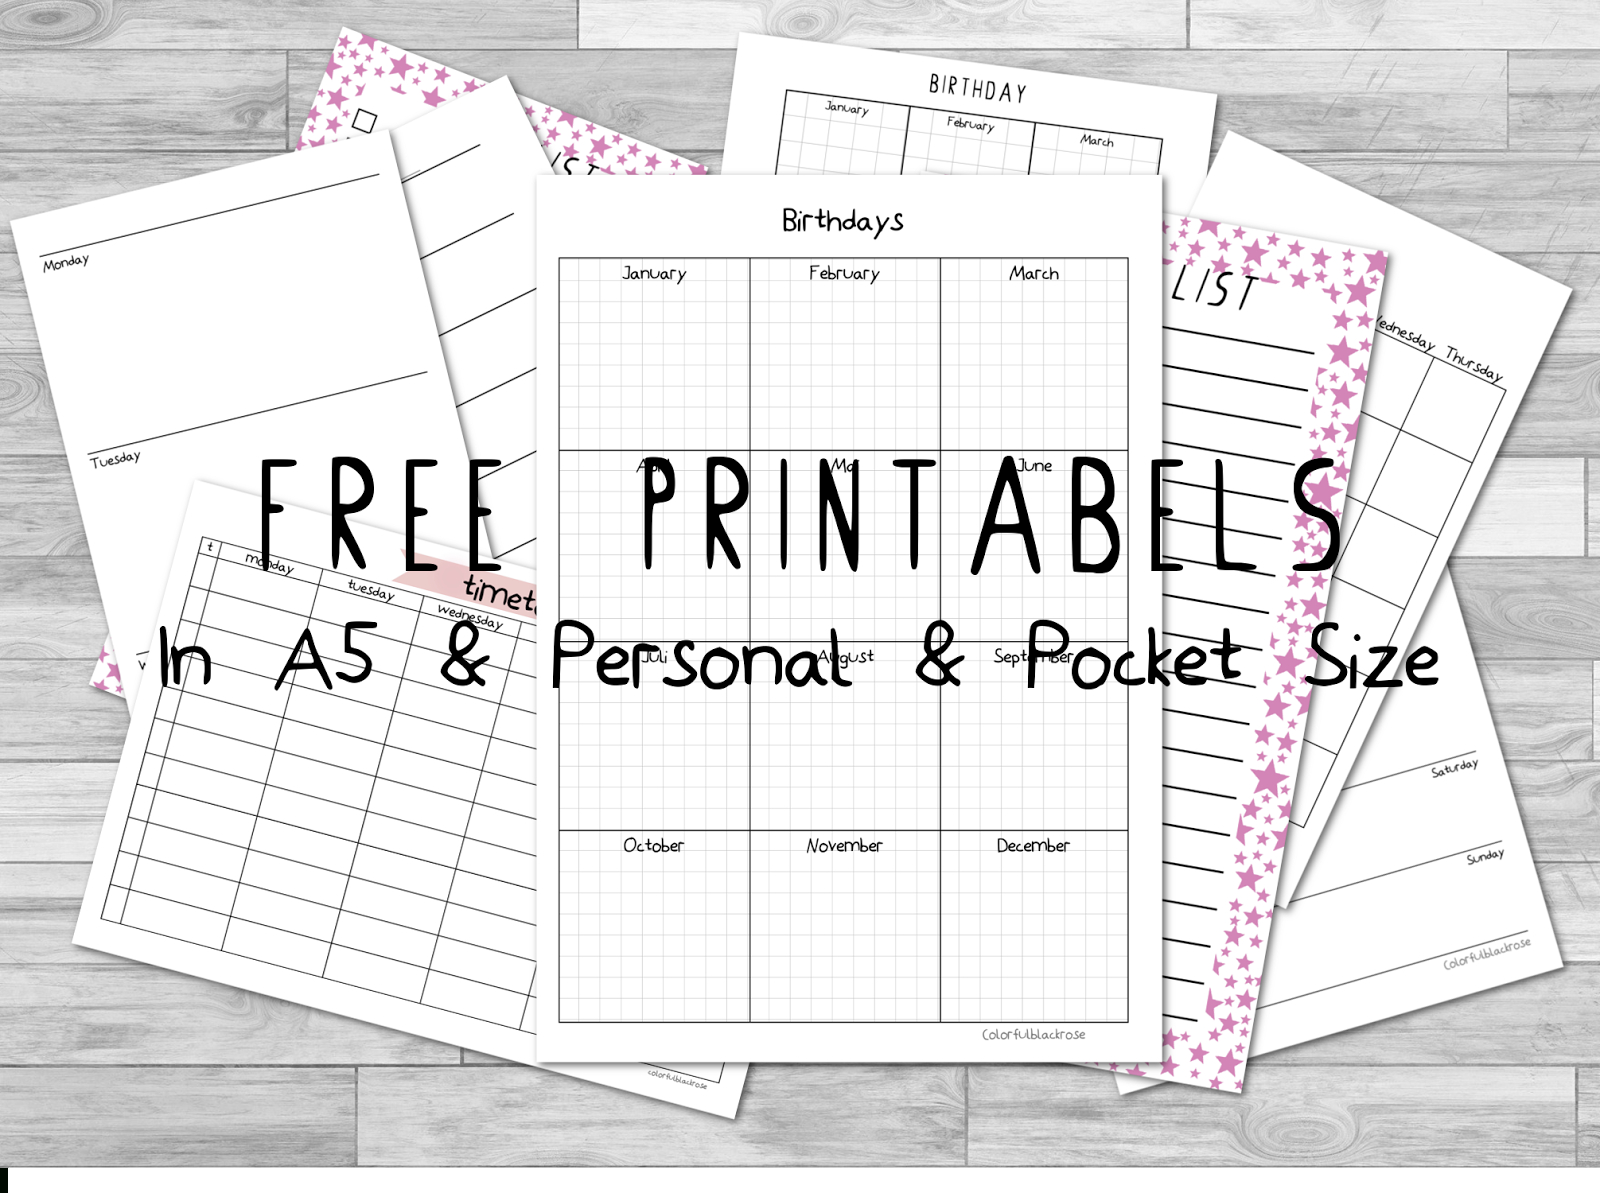 Filofax | Free Printables | Colorfulblackrose - Free Filofax Printables